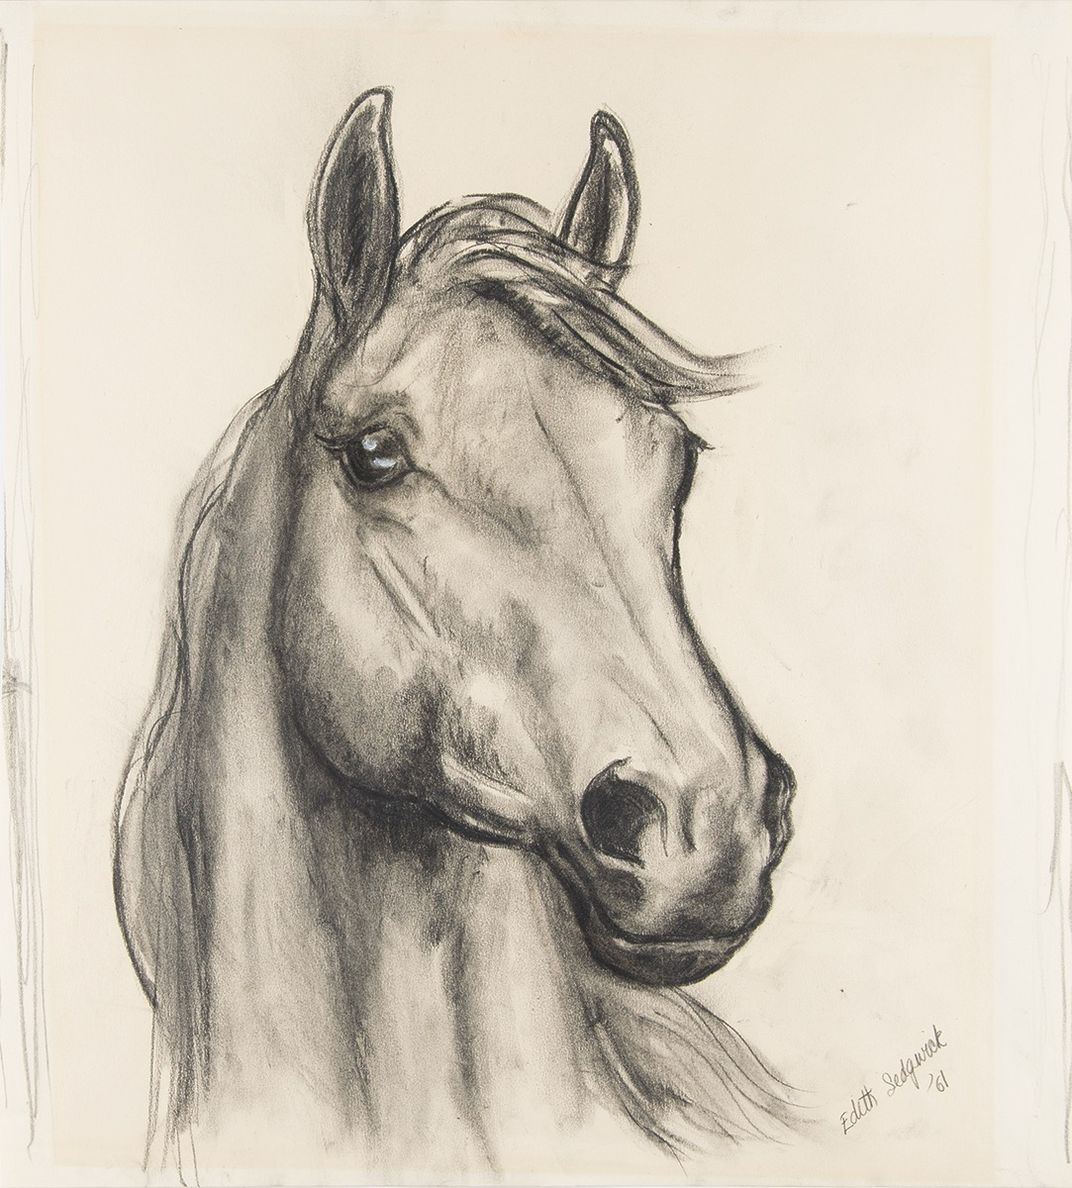 A sketch of a horse